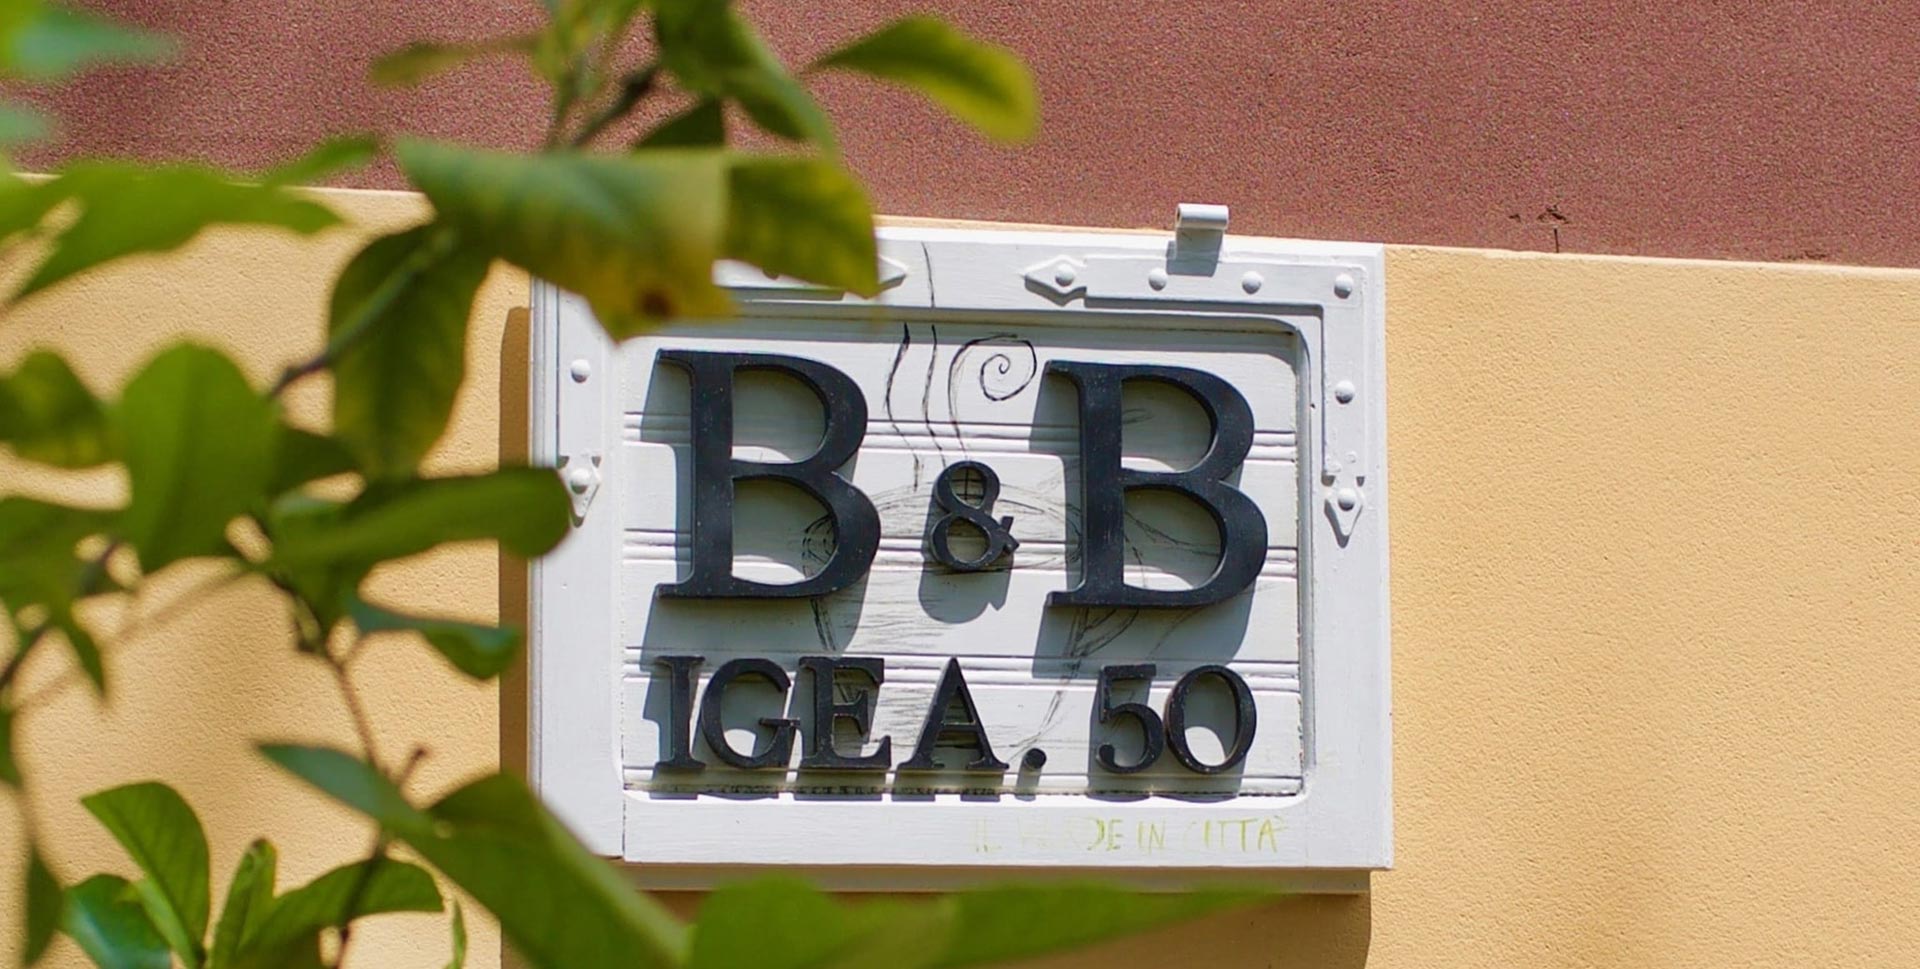 B&B Igea50 a Modena 